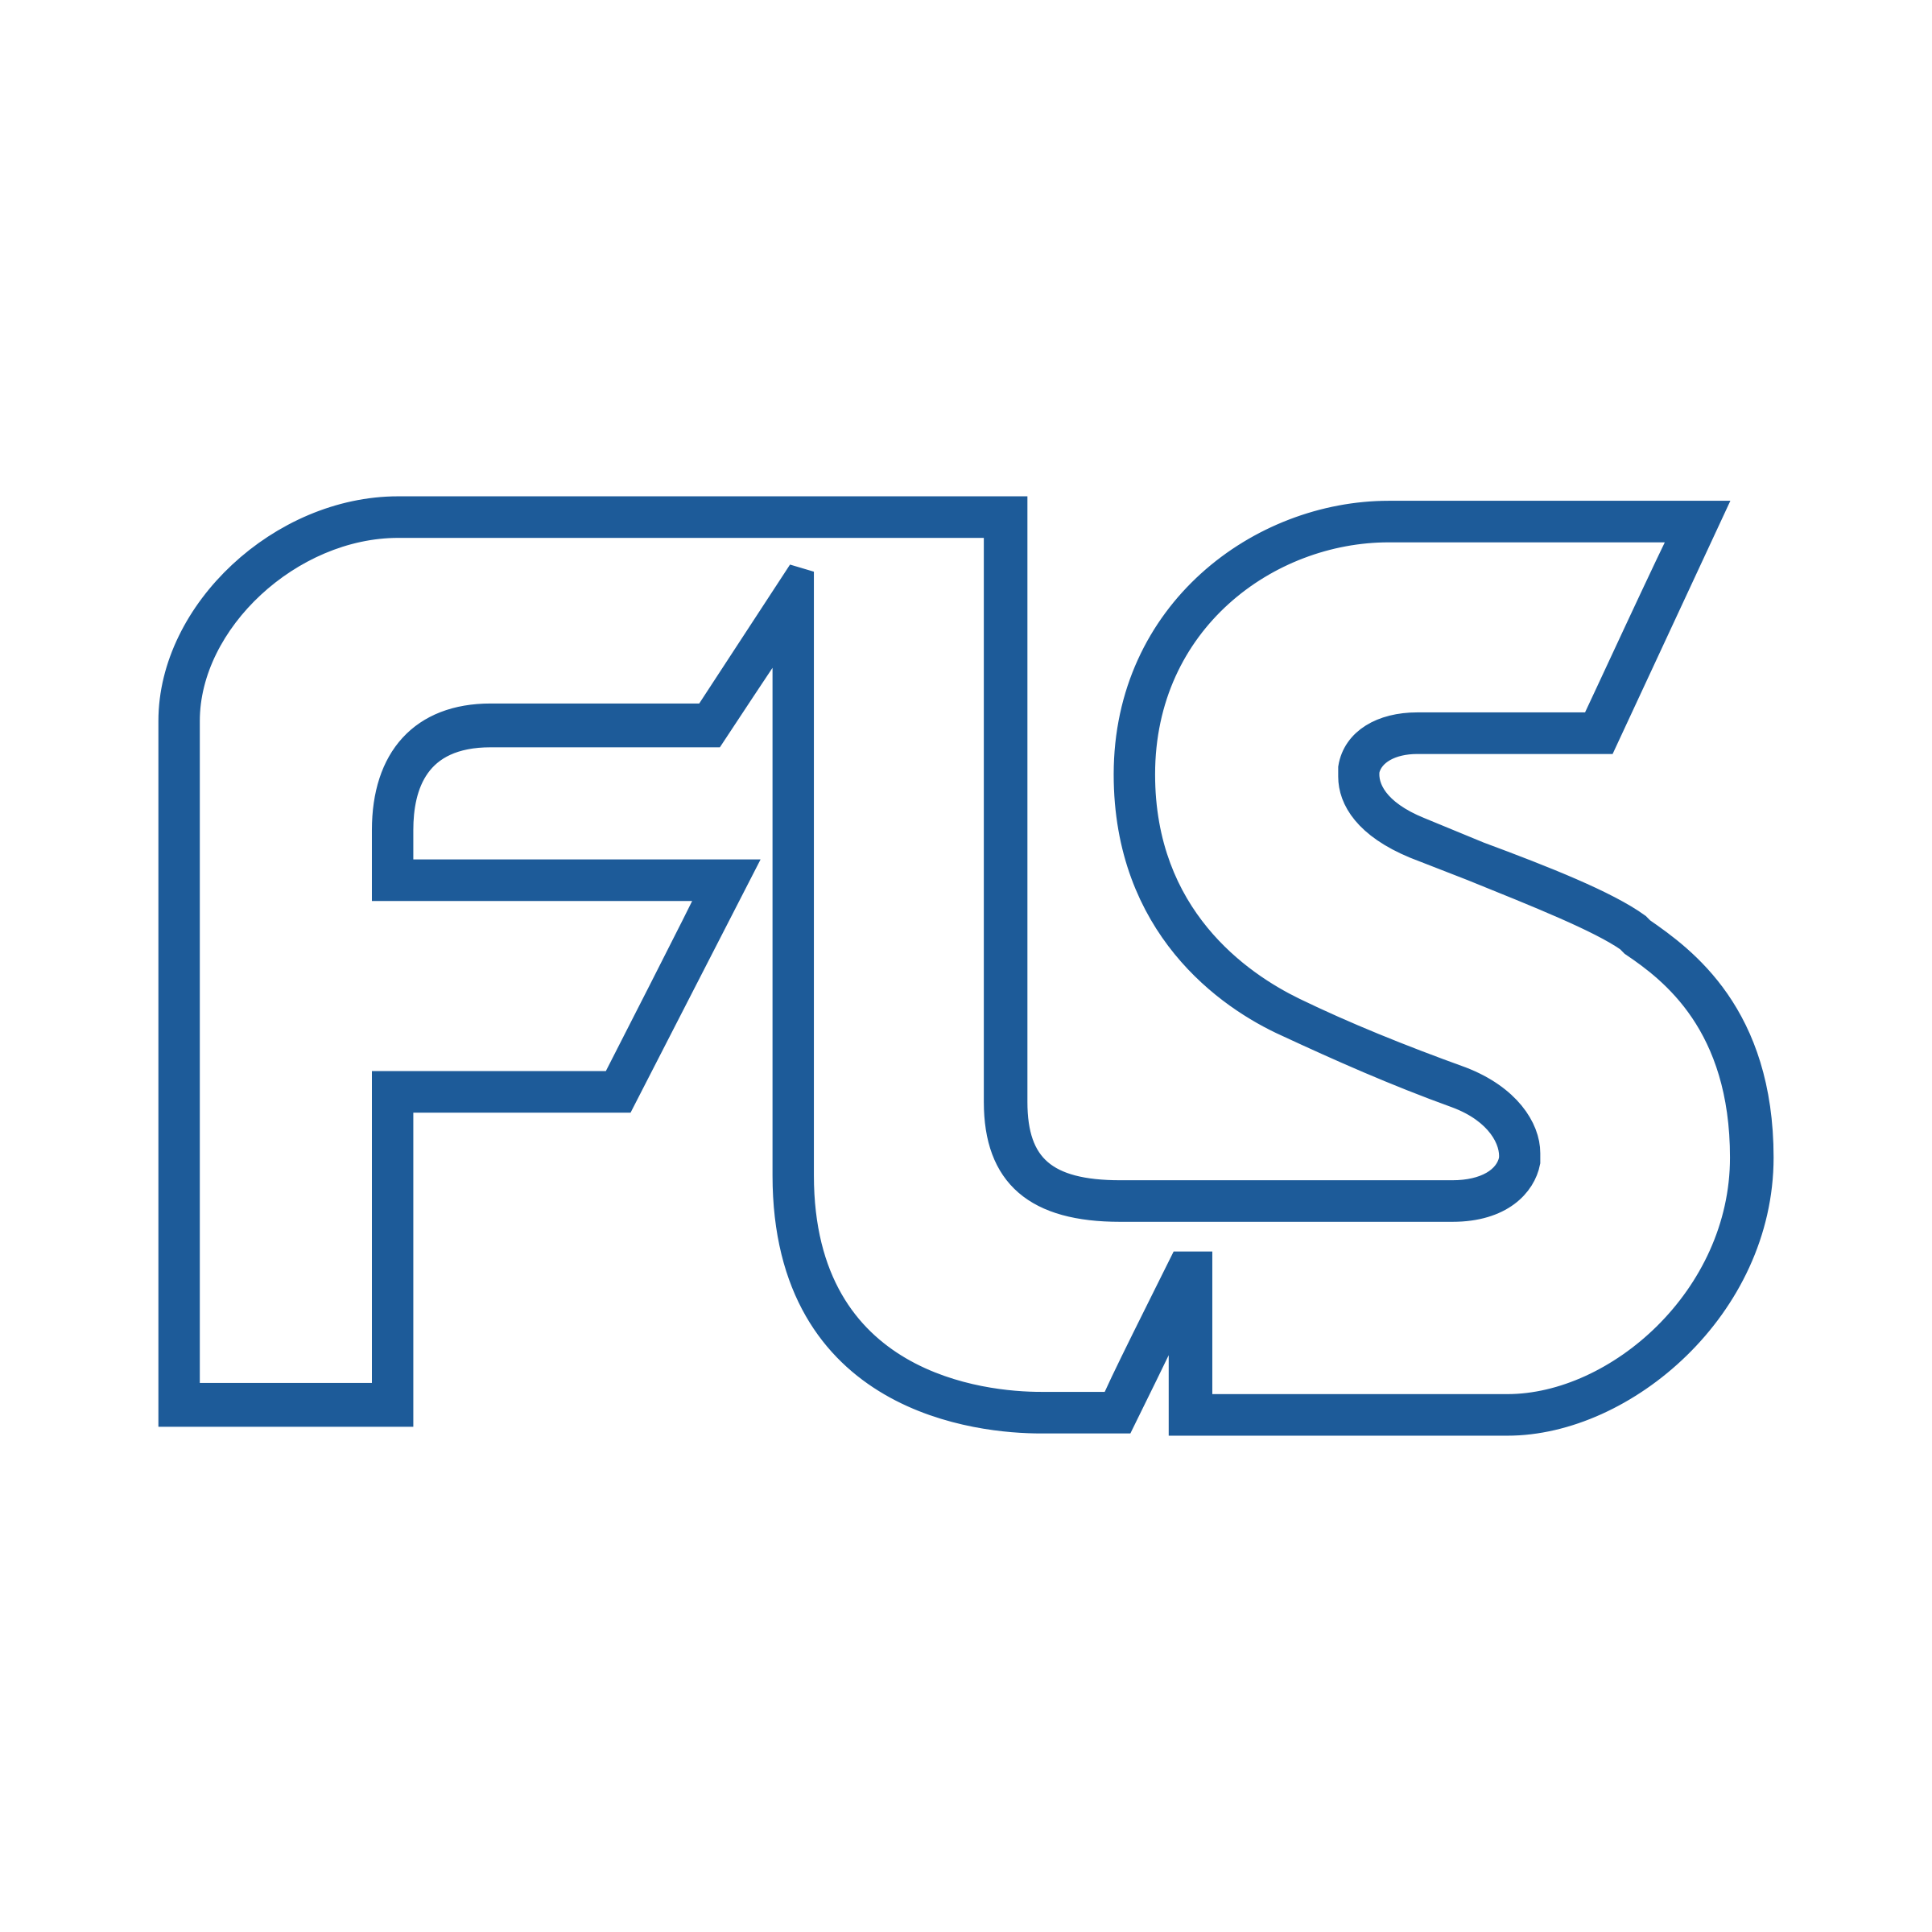 FLS Logo - FLS Industries Logo PNG Transparent & SVG Vector - Freebie Supply